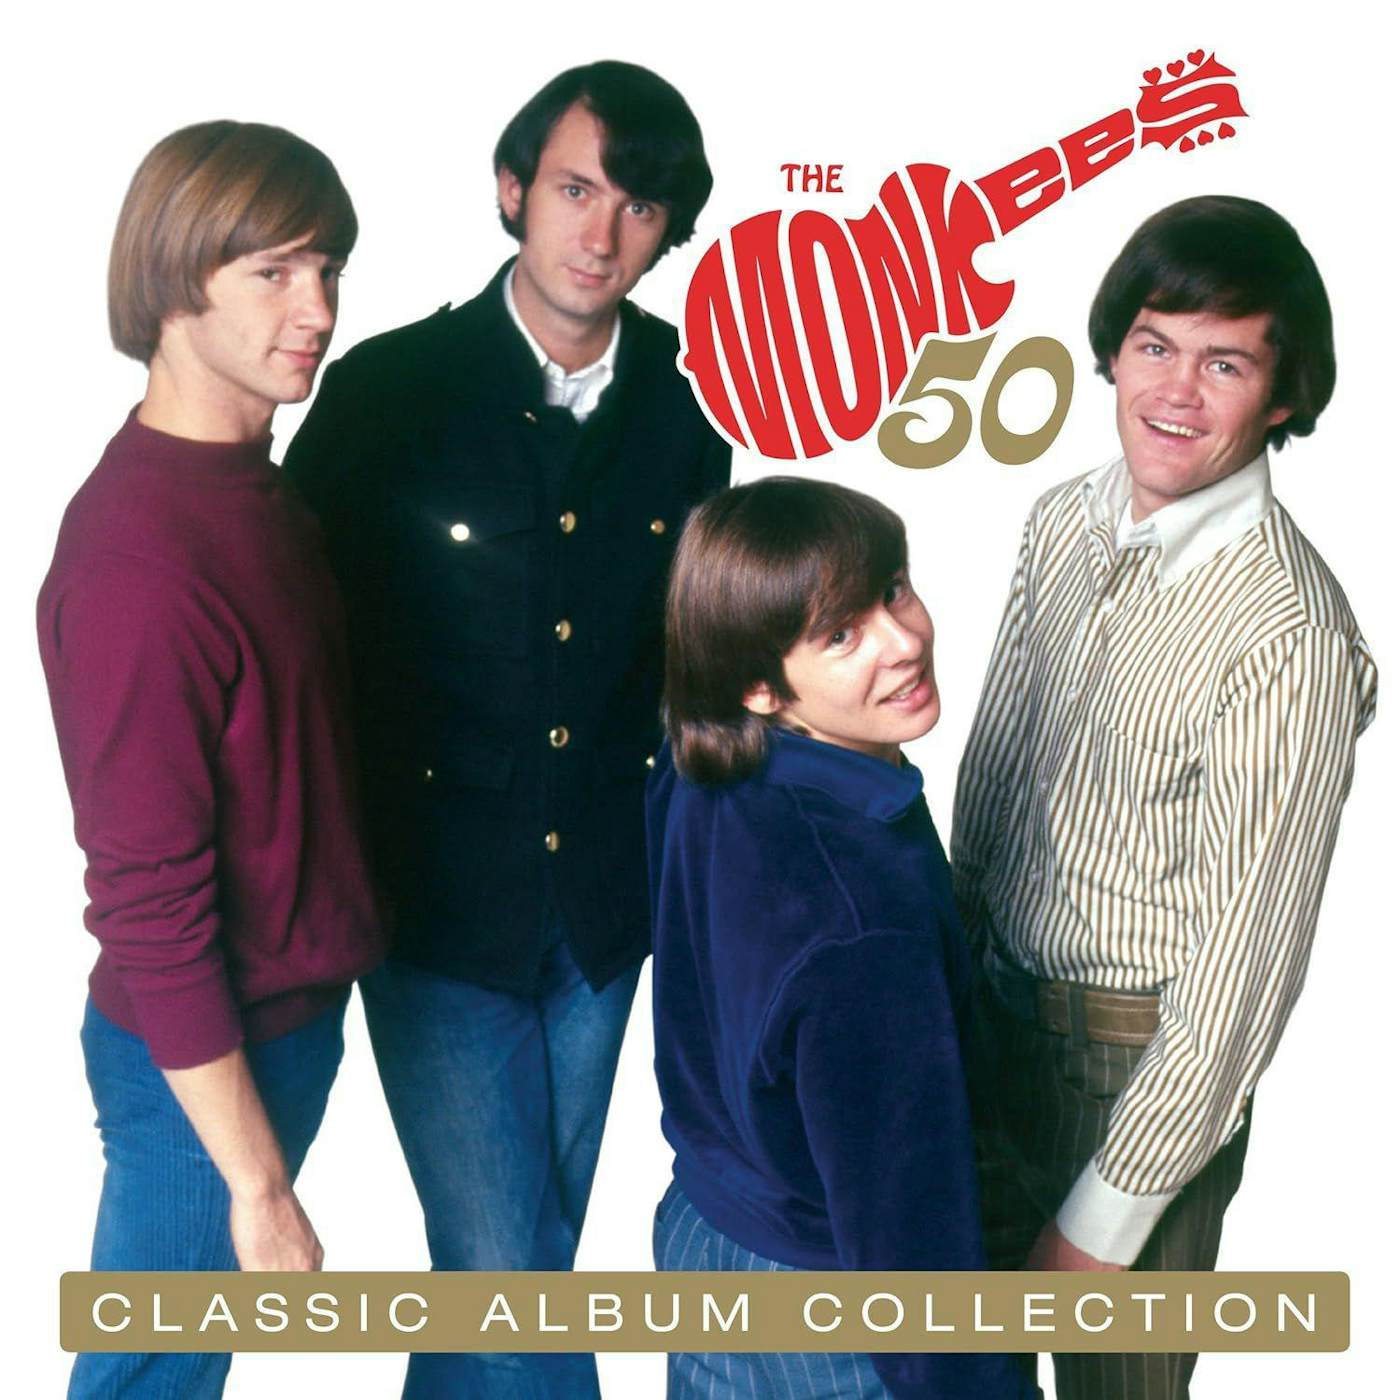 The Monkees Classic Album Collection (10lp Multi-colored Boxset) Vinyl Record